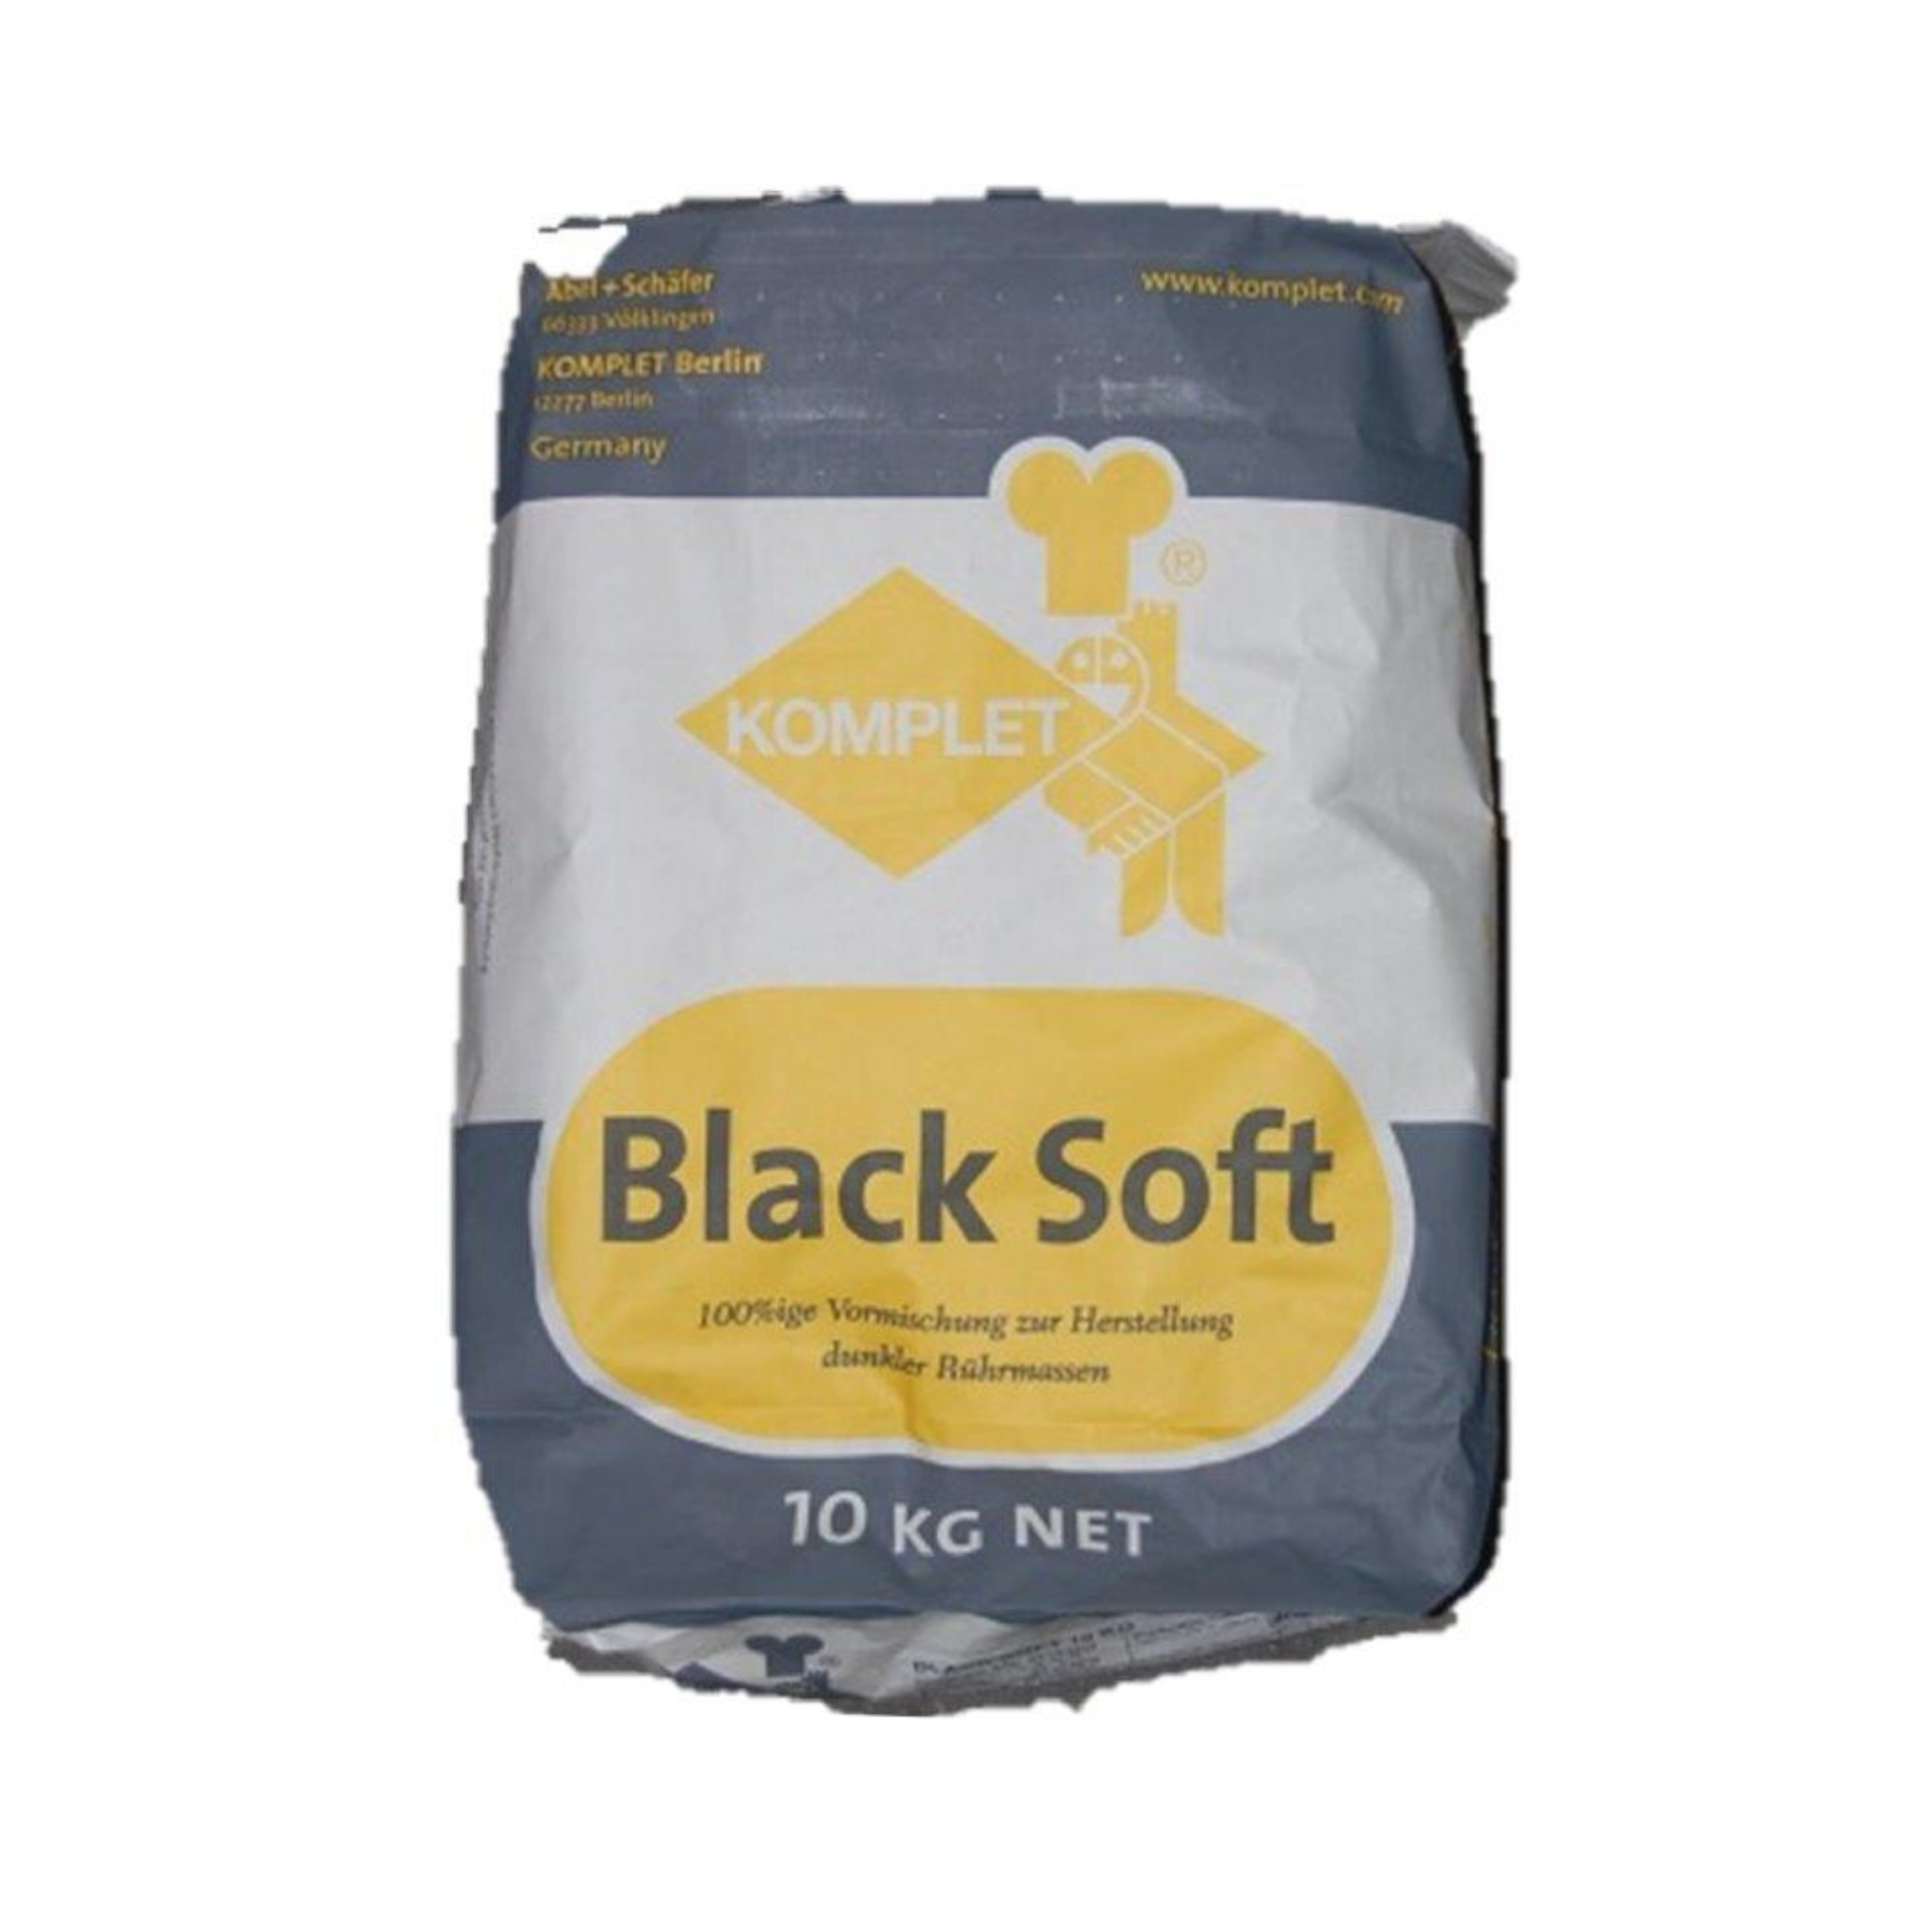 Black Soft sacco da 10kg